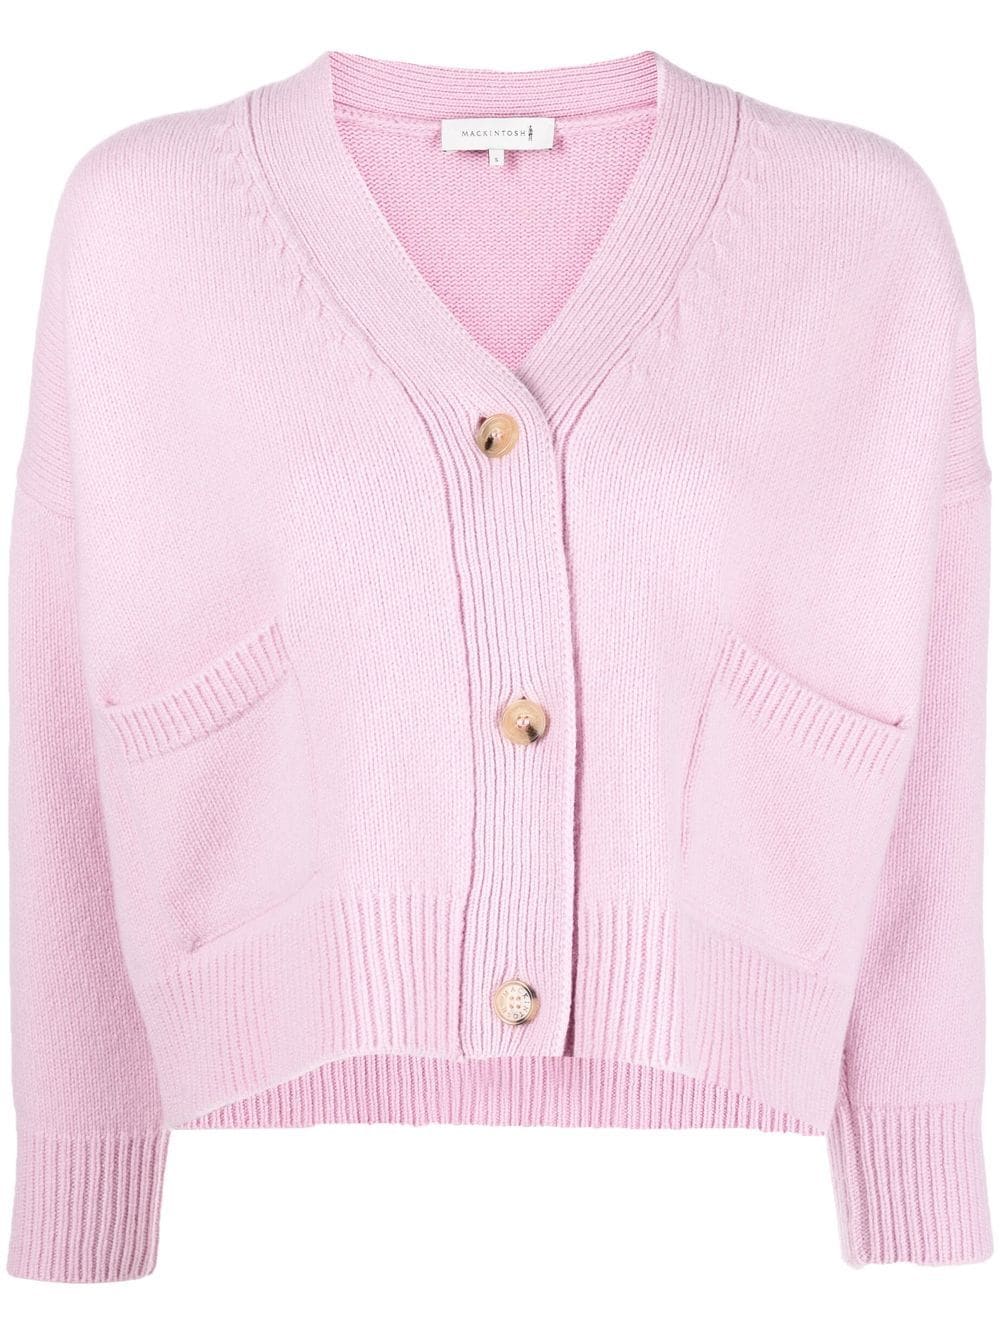 Mackintosh Kelle V-neck Wool Cardigan In Pink